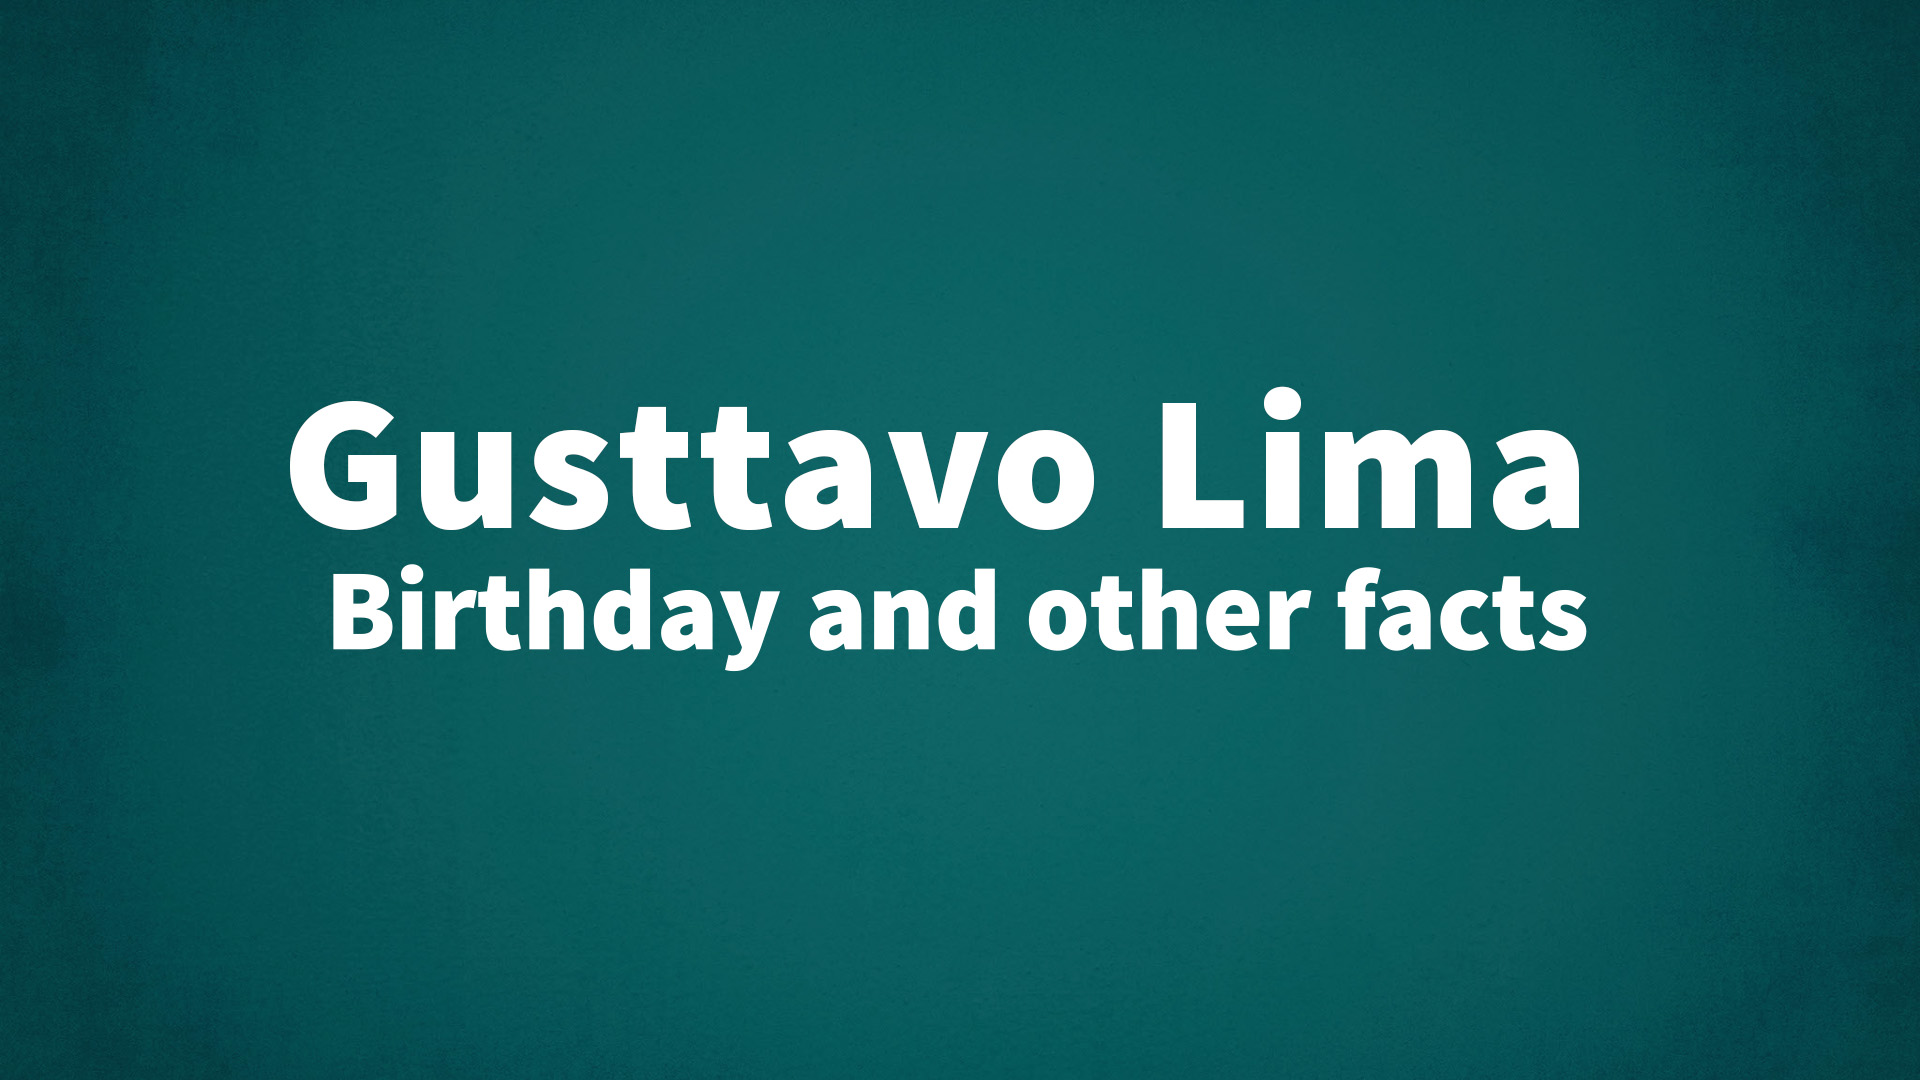 title image for Gusttavo Lima birthday